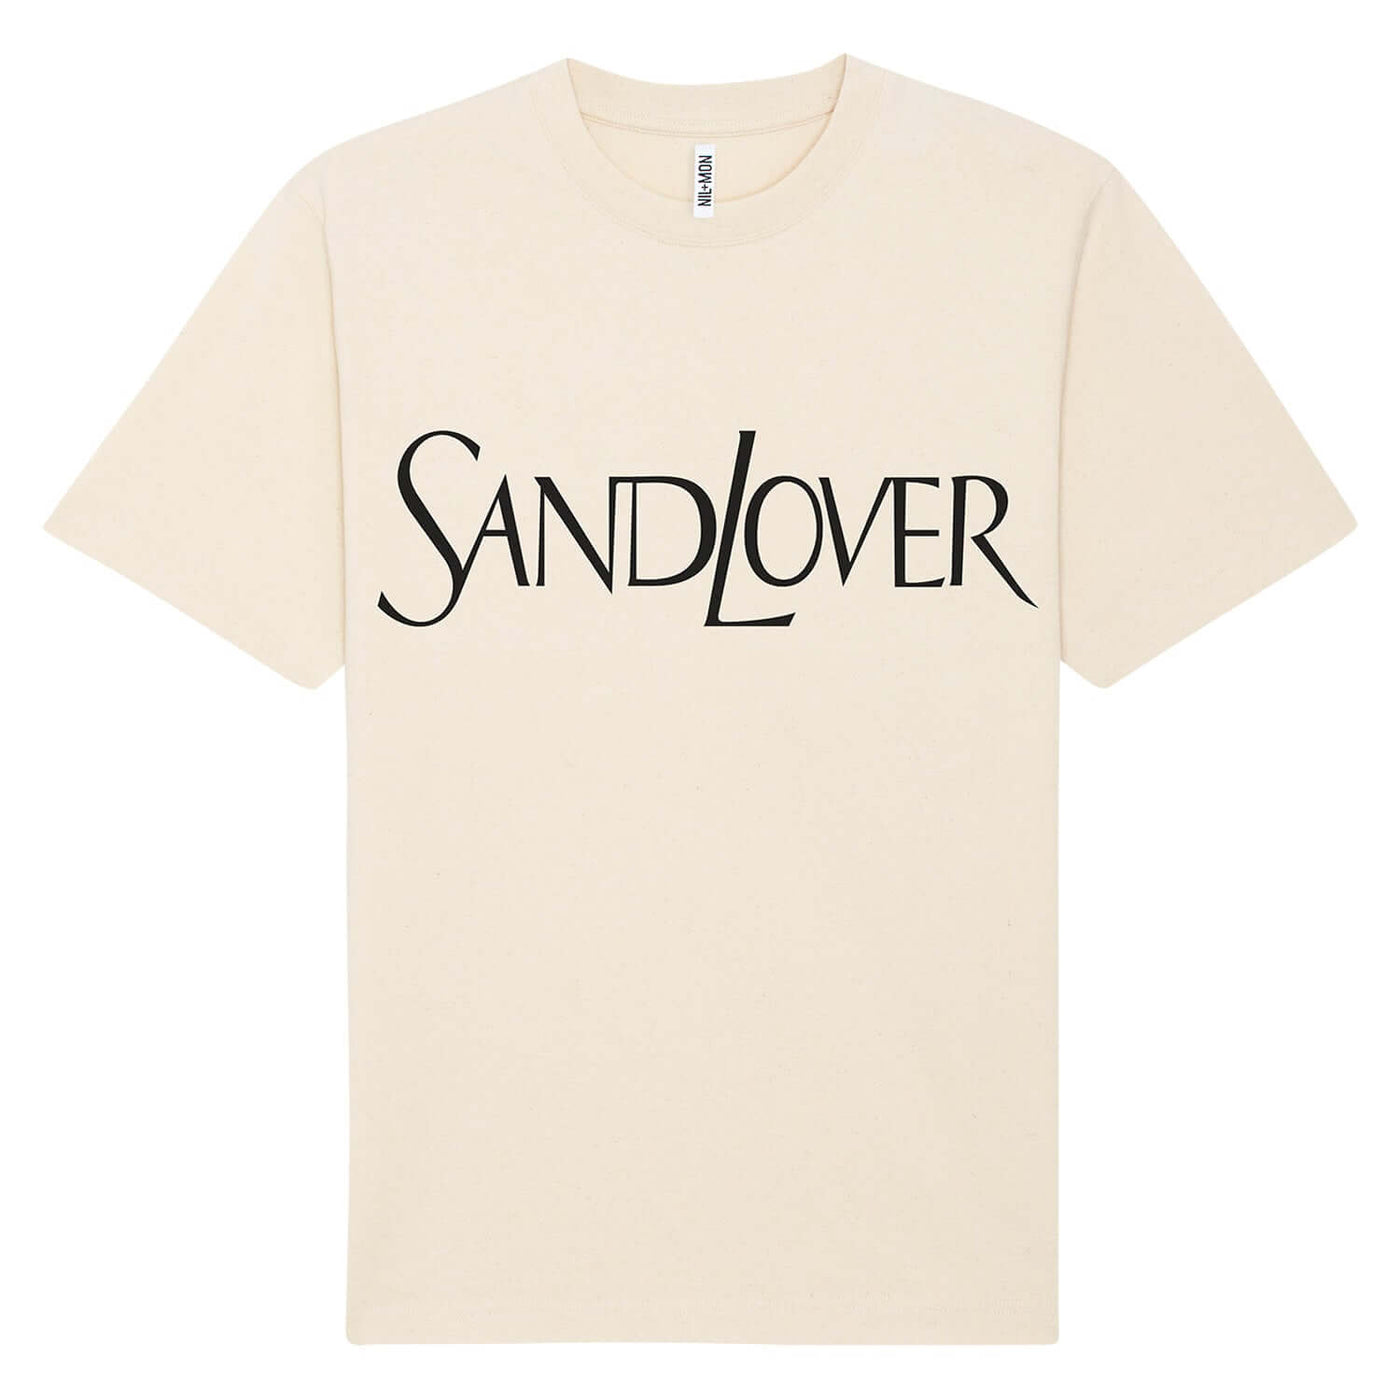 XXL Beach Shirt "Sandlover" - creme